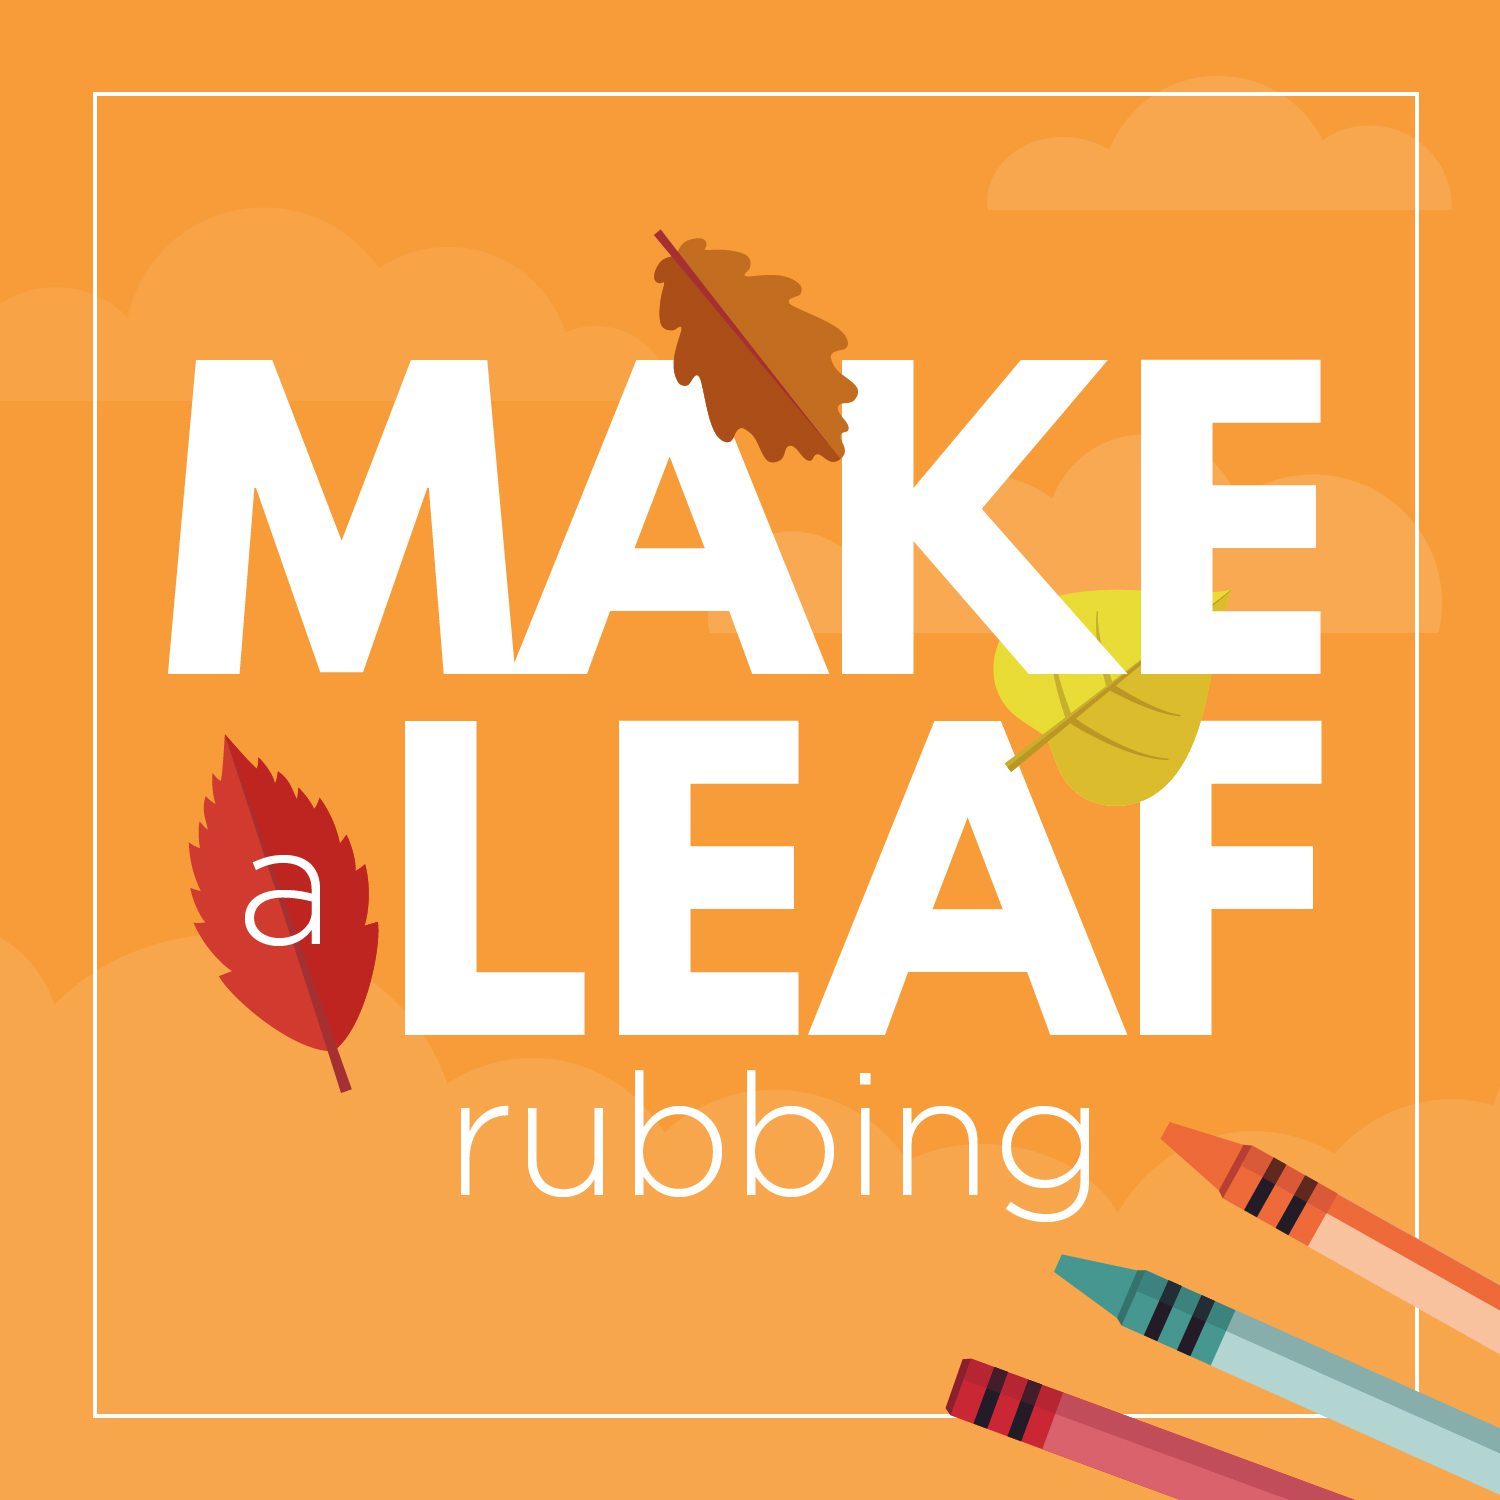 Make a leaf rubbing